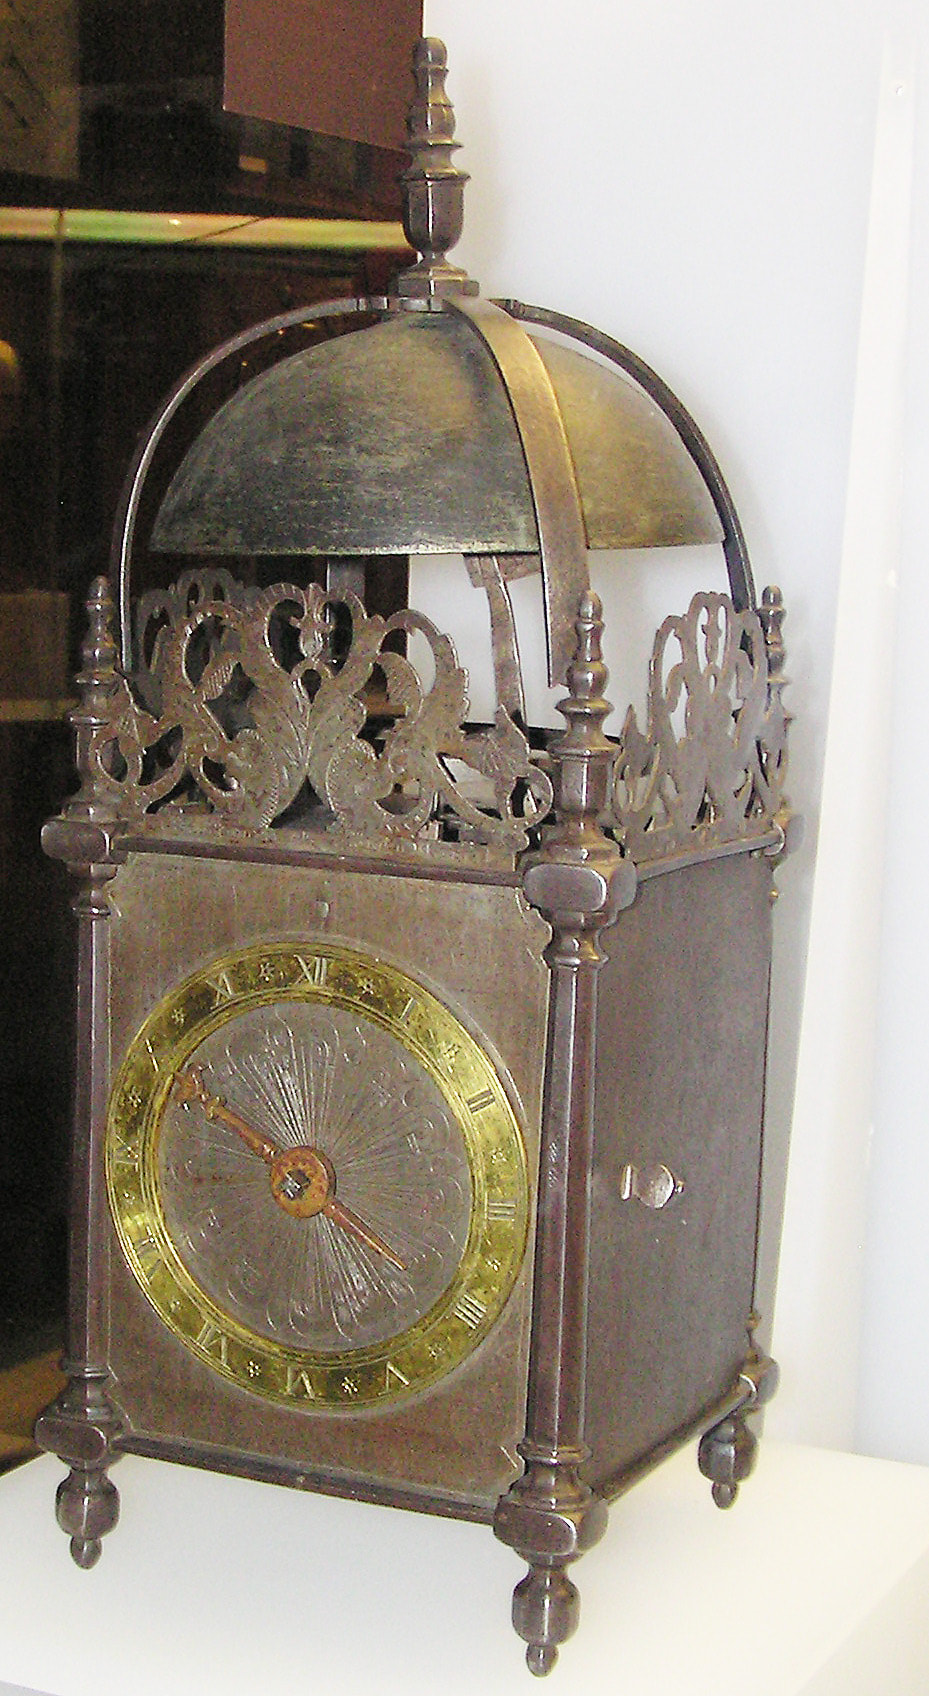 Early Lantern clockPicture